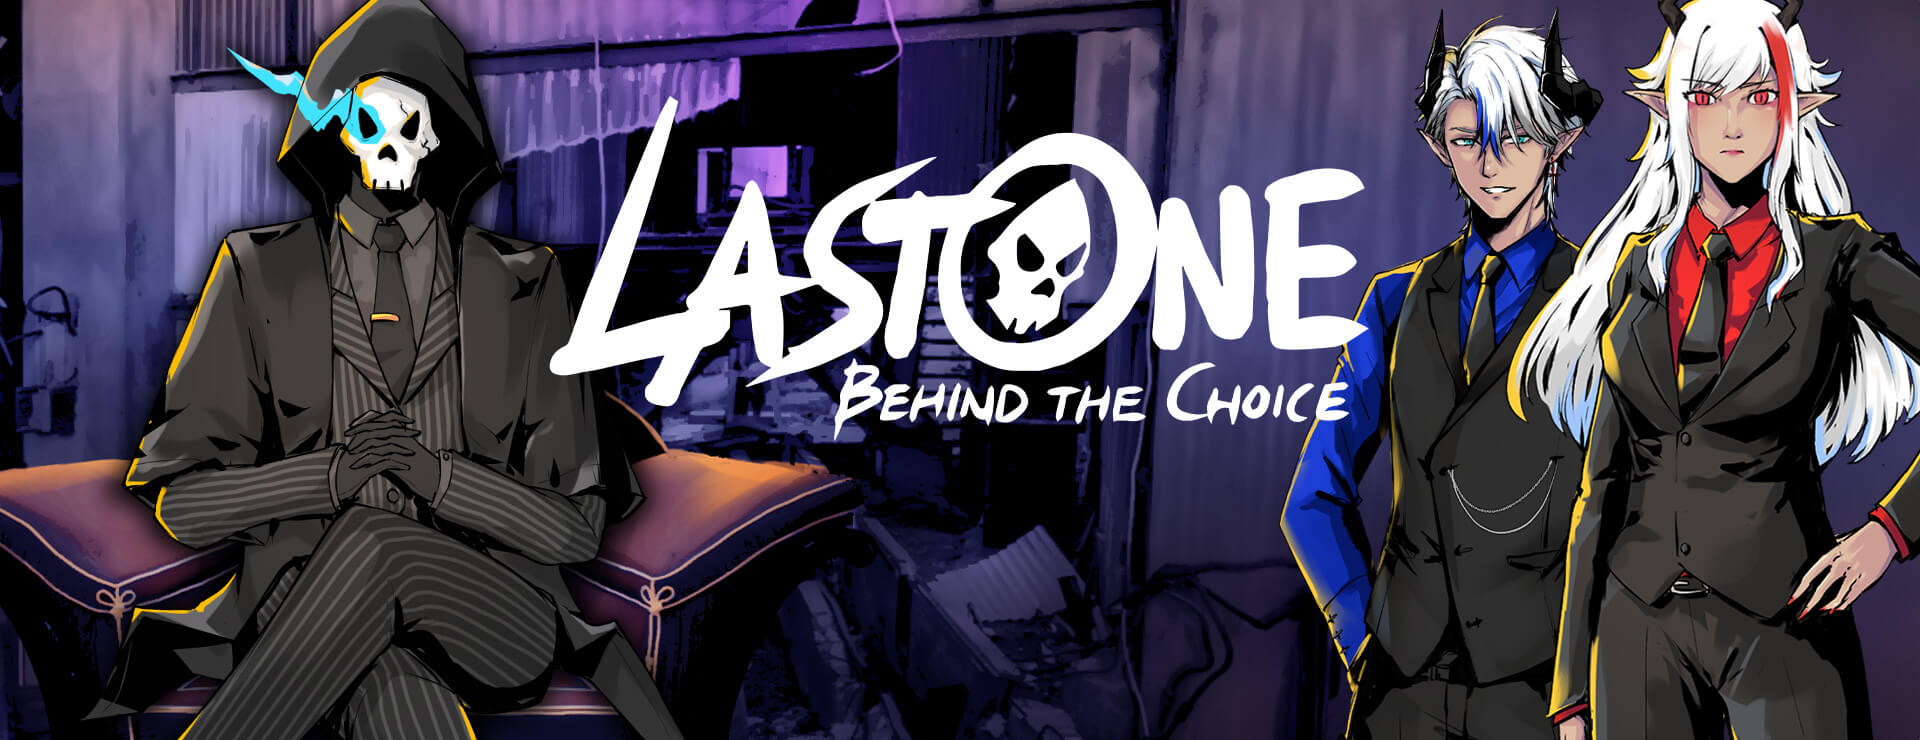 Lastone: Behind the Choice - 虚拟小说 遊戲